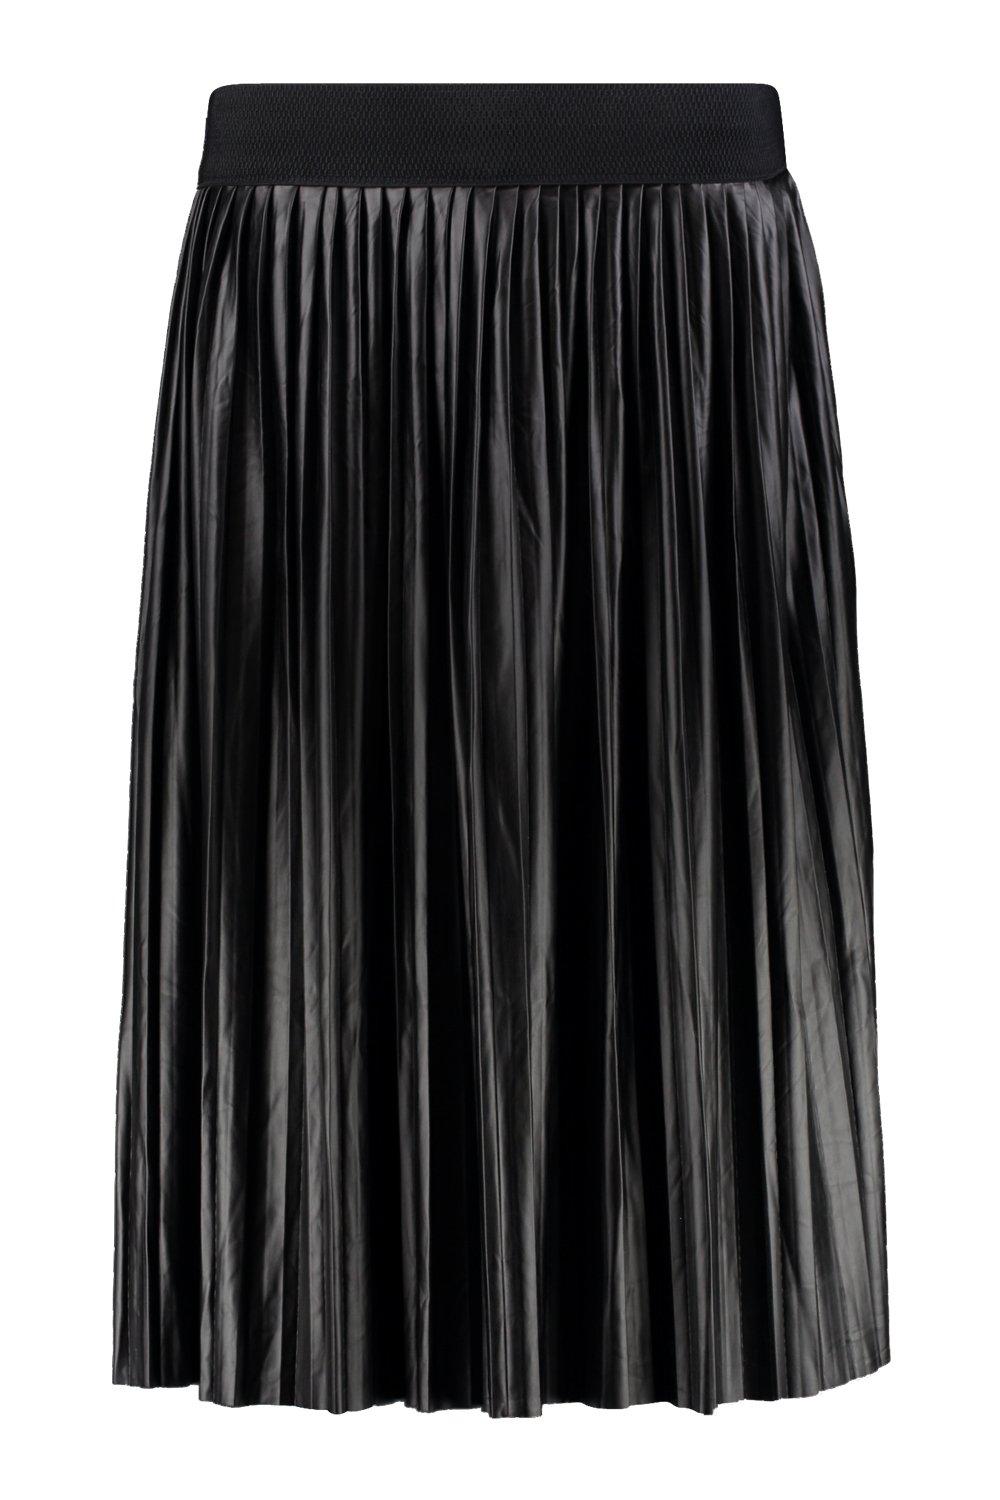 Boohoo Womens Jeana Metallic Pleated Midi Skirt | eBay